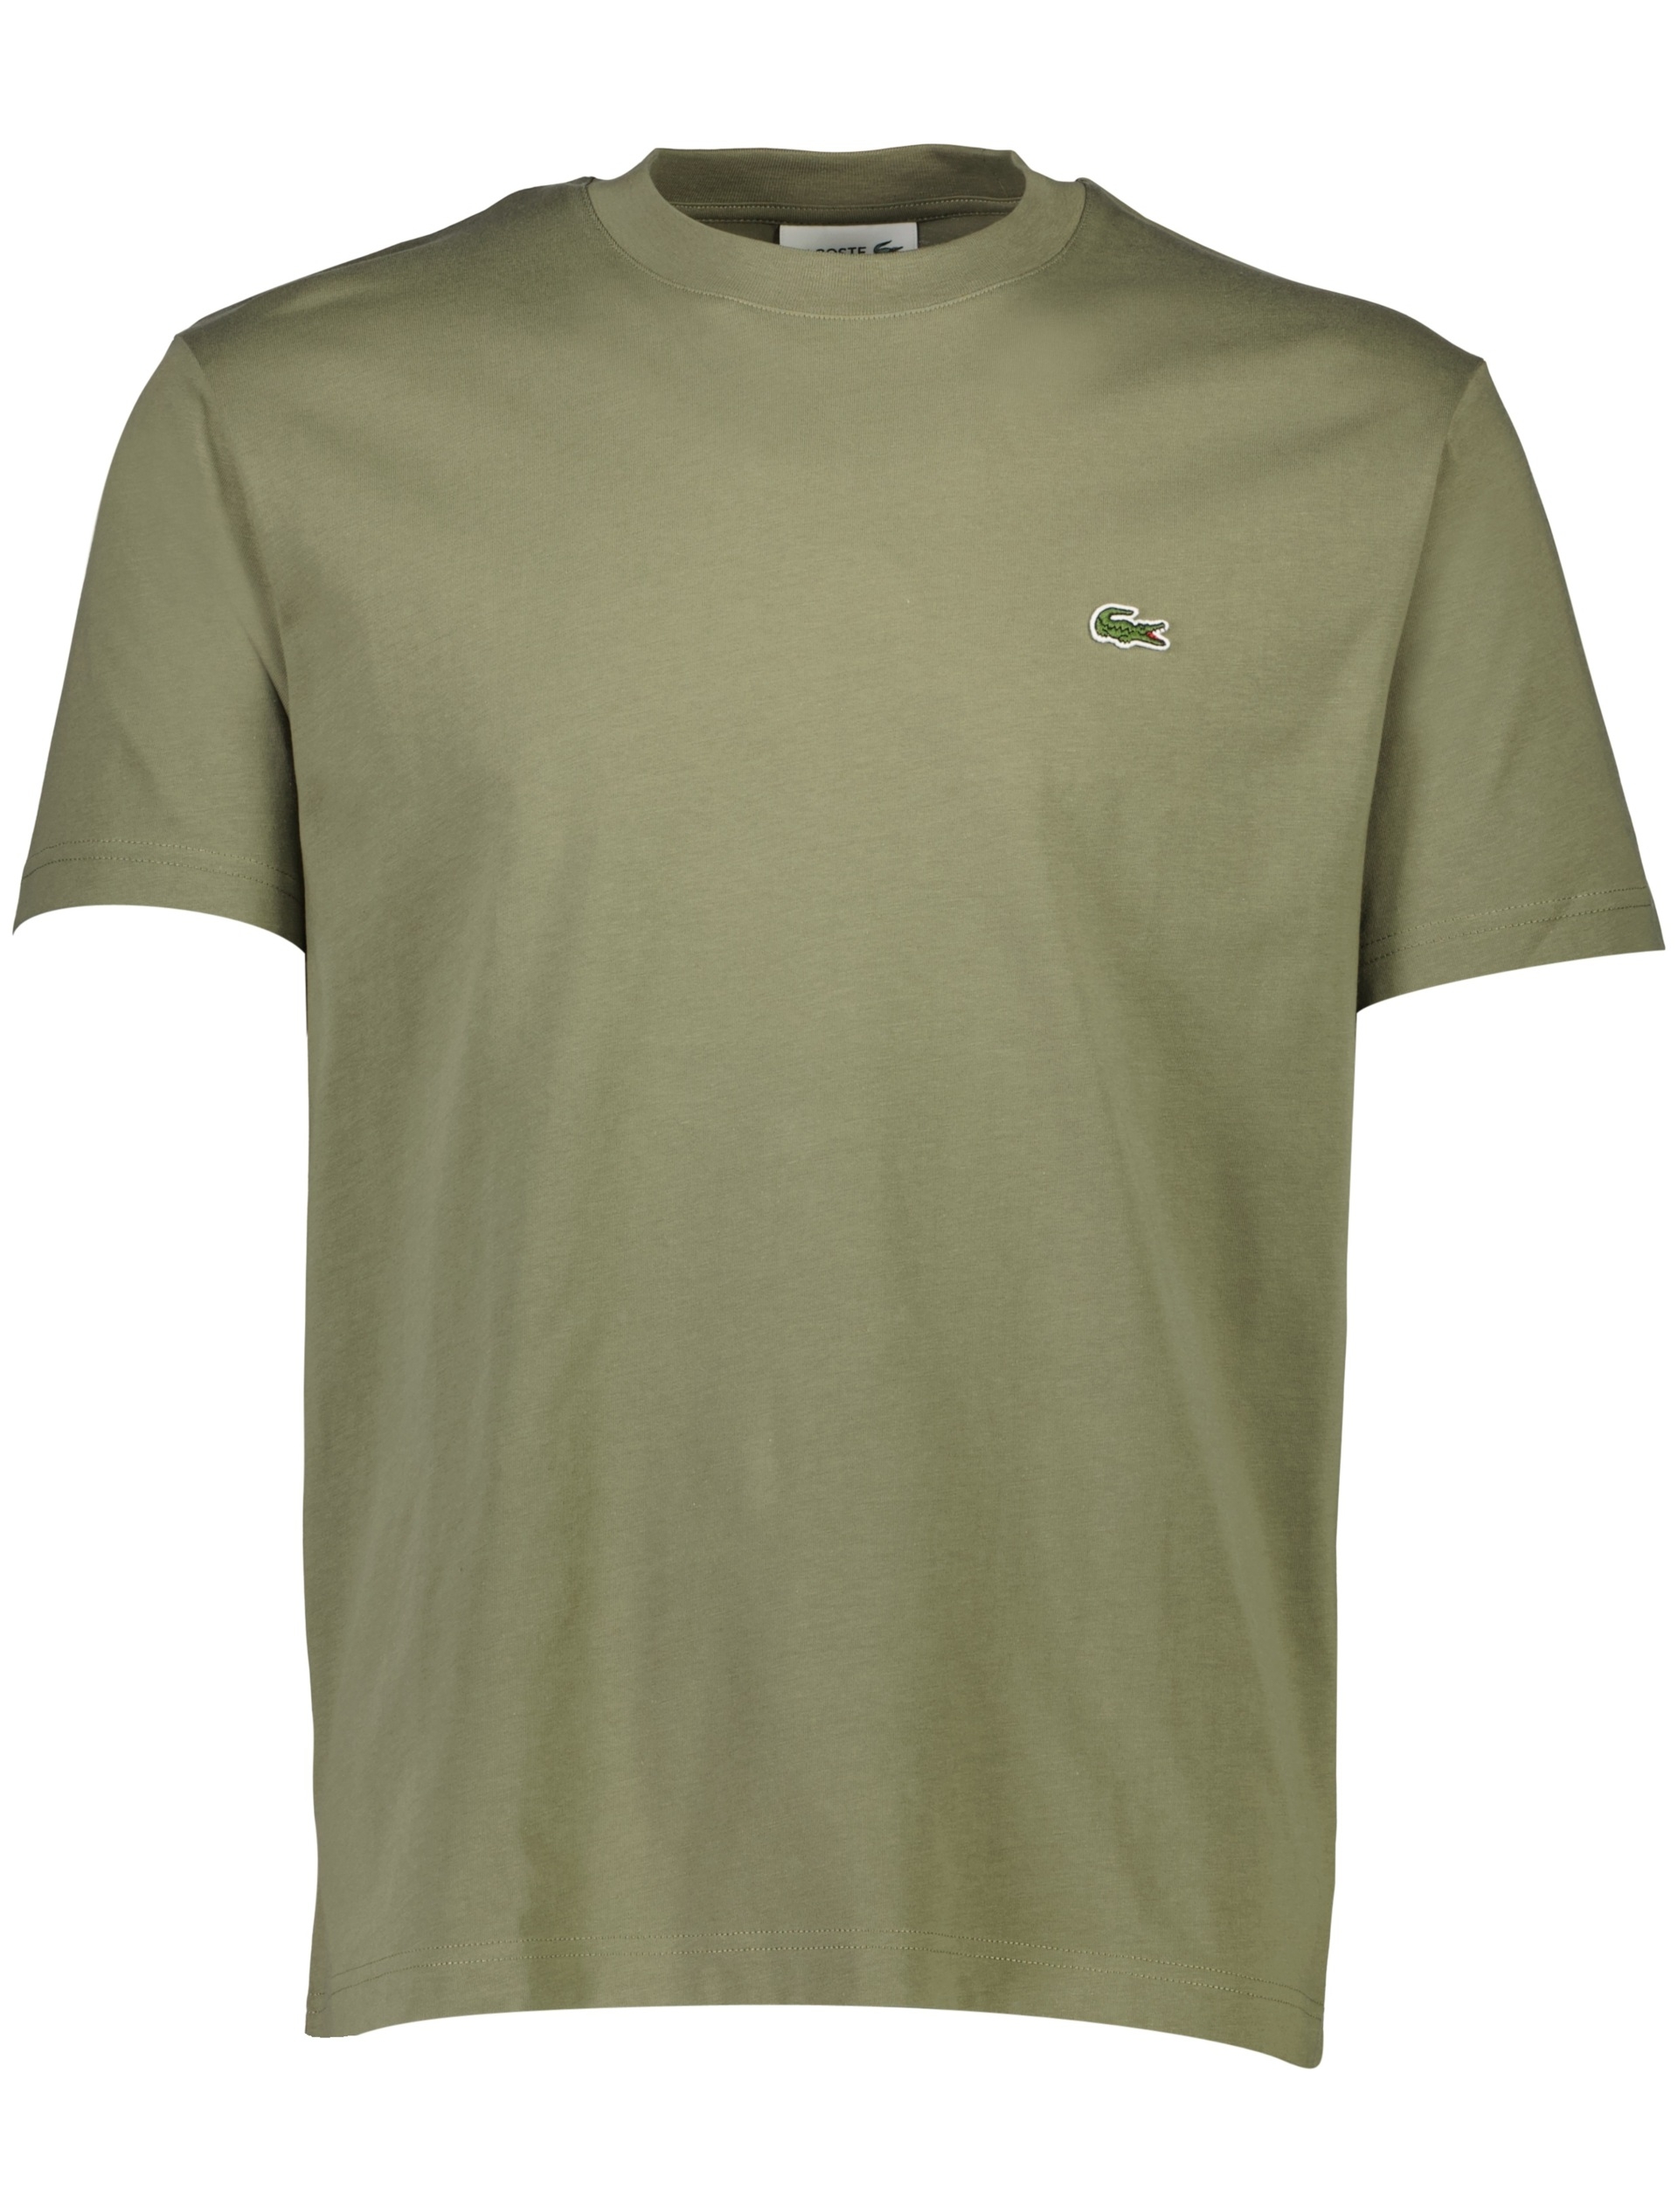 Lacoste T-shirt grøn / 316 oliven